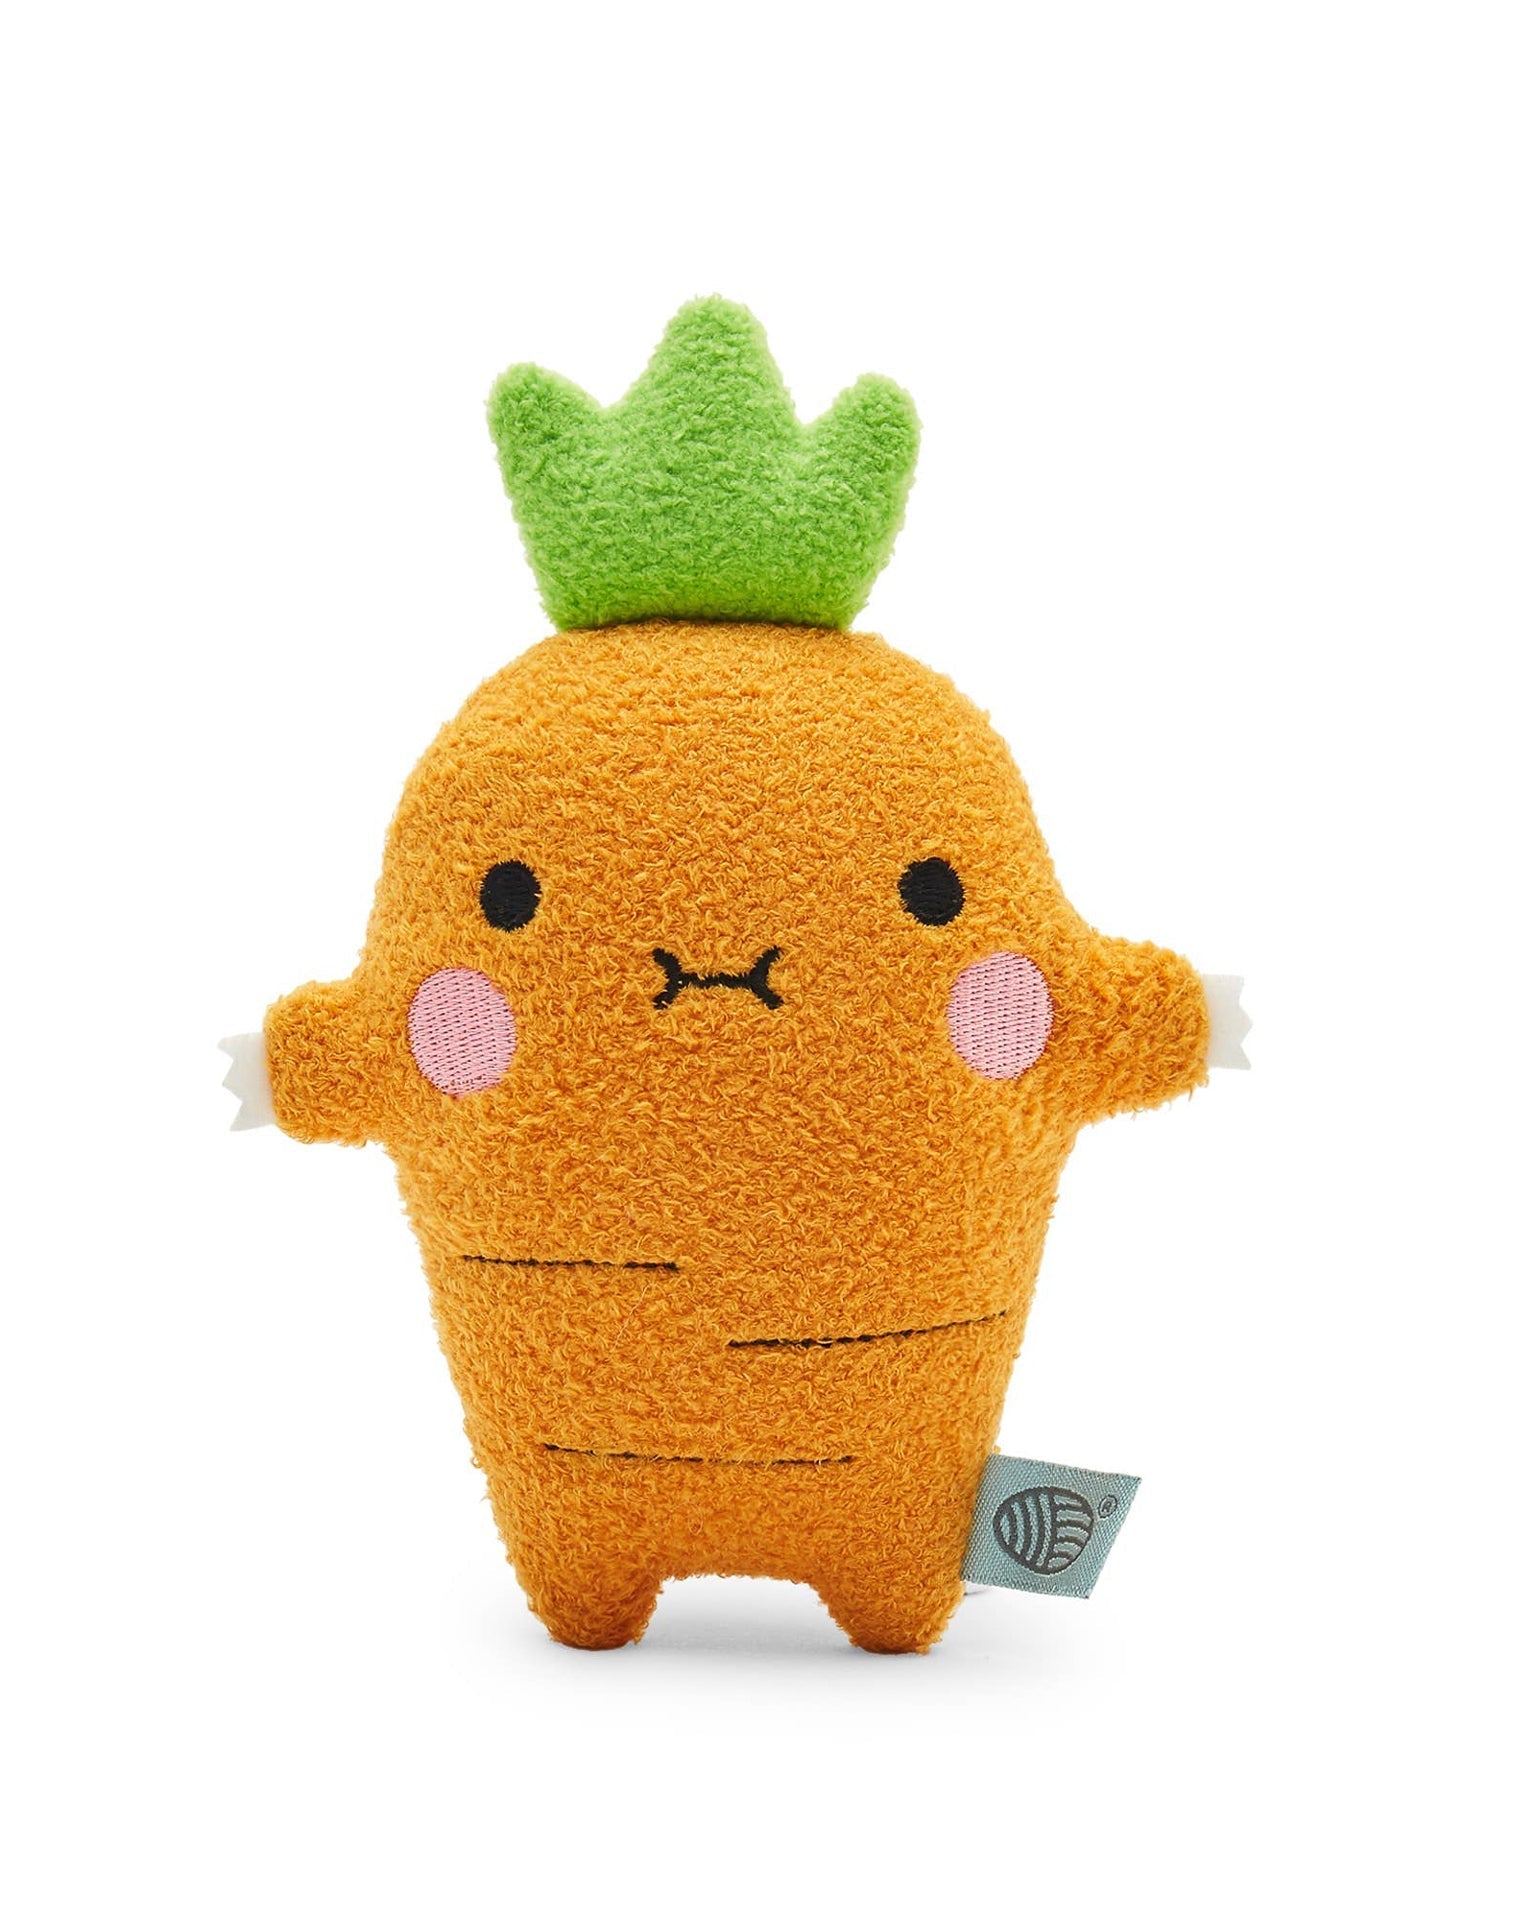 Little noodoll play ricecrunch mini - carrot